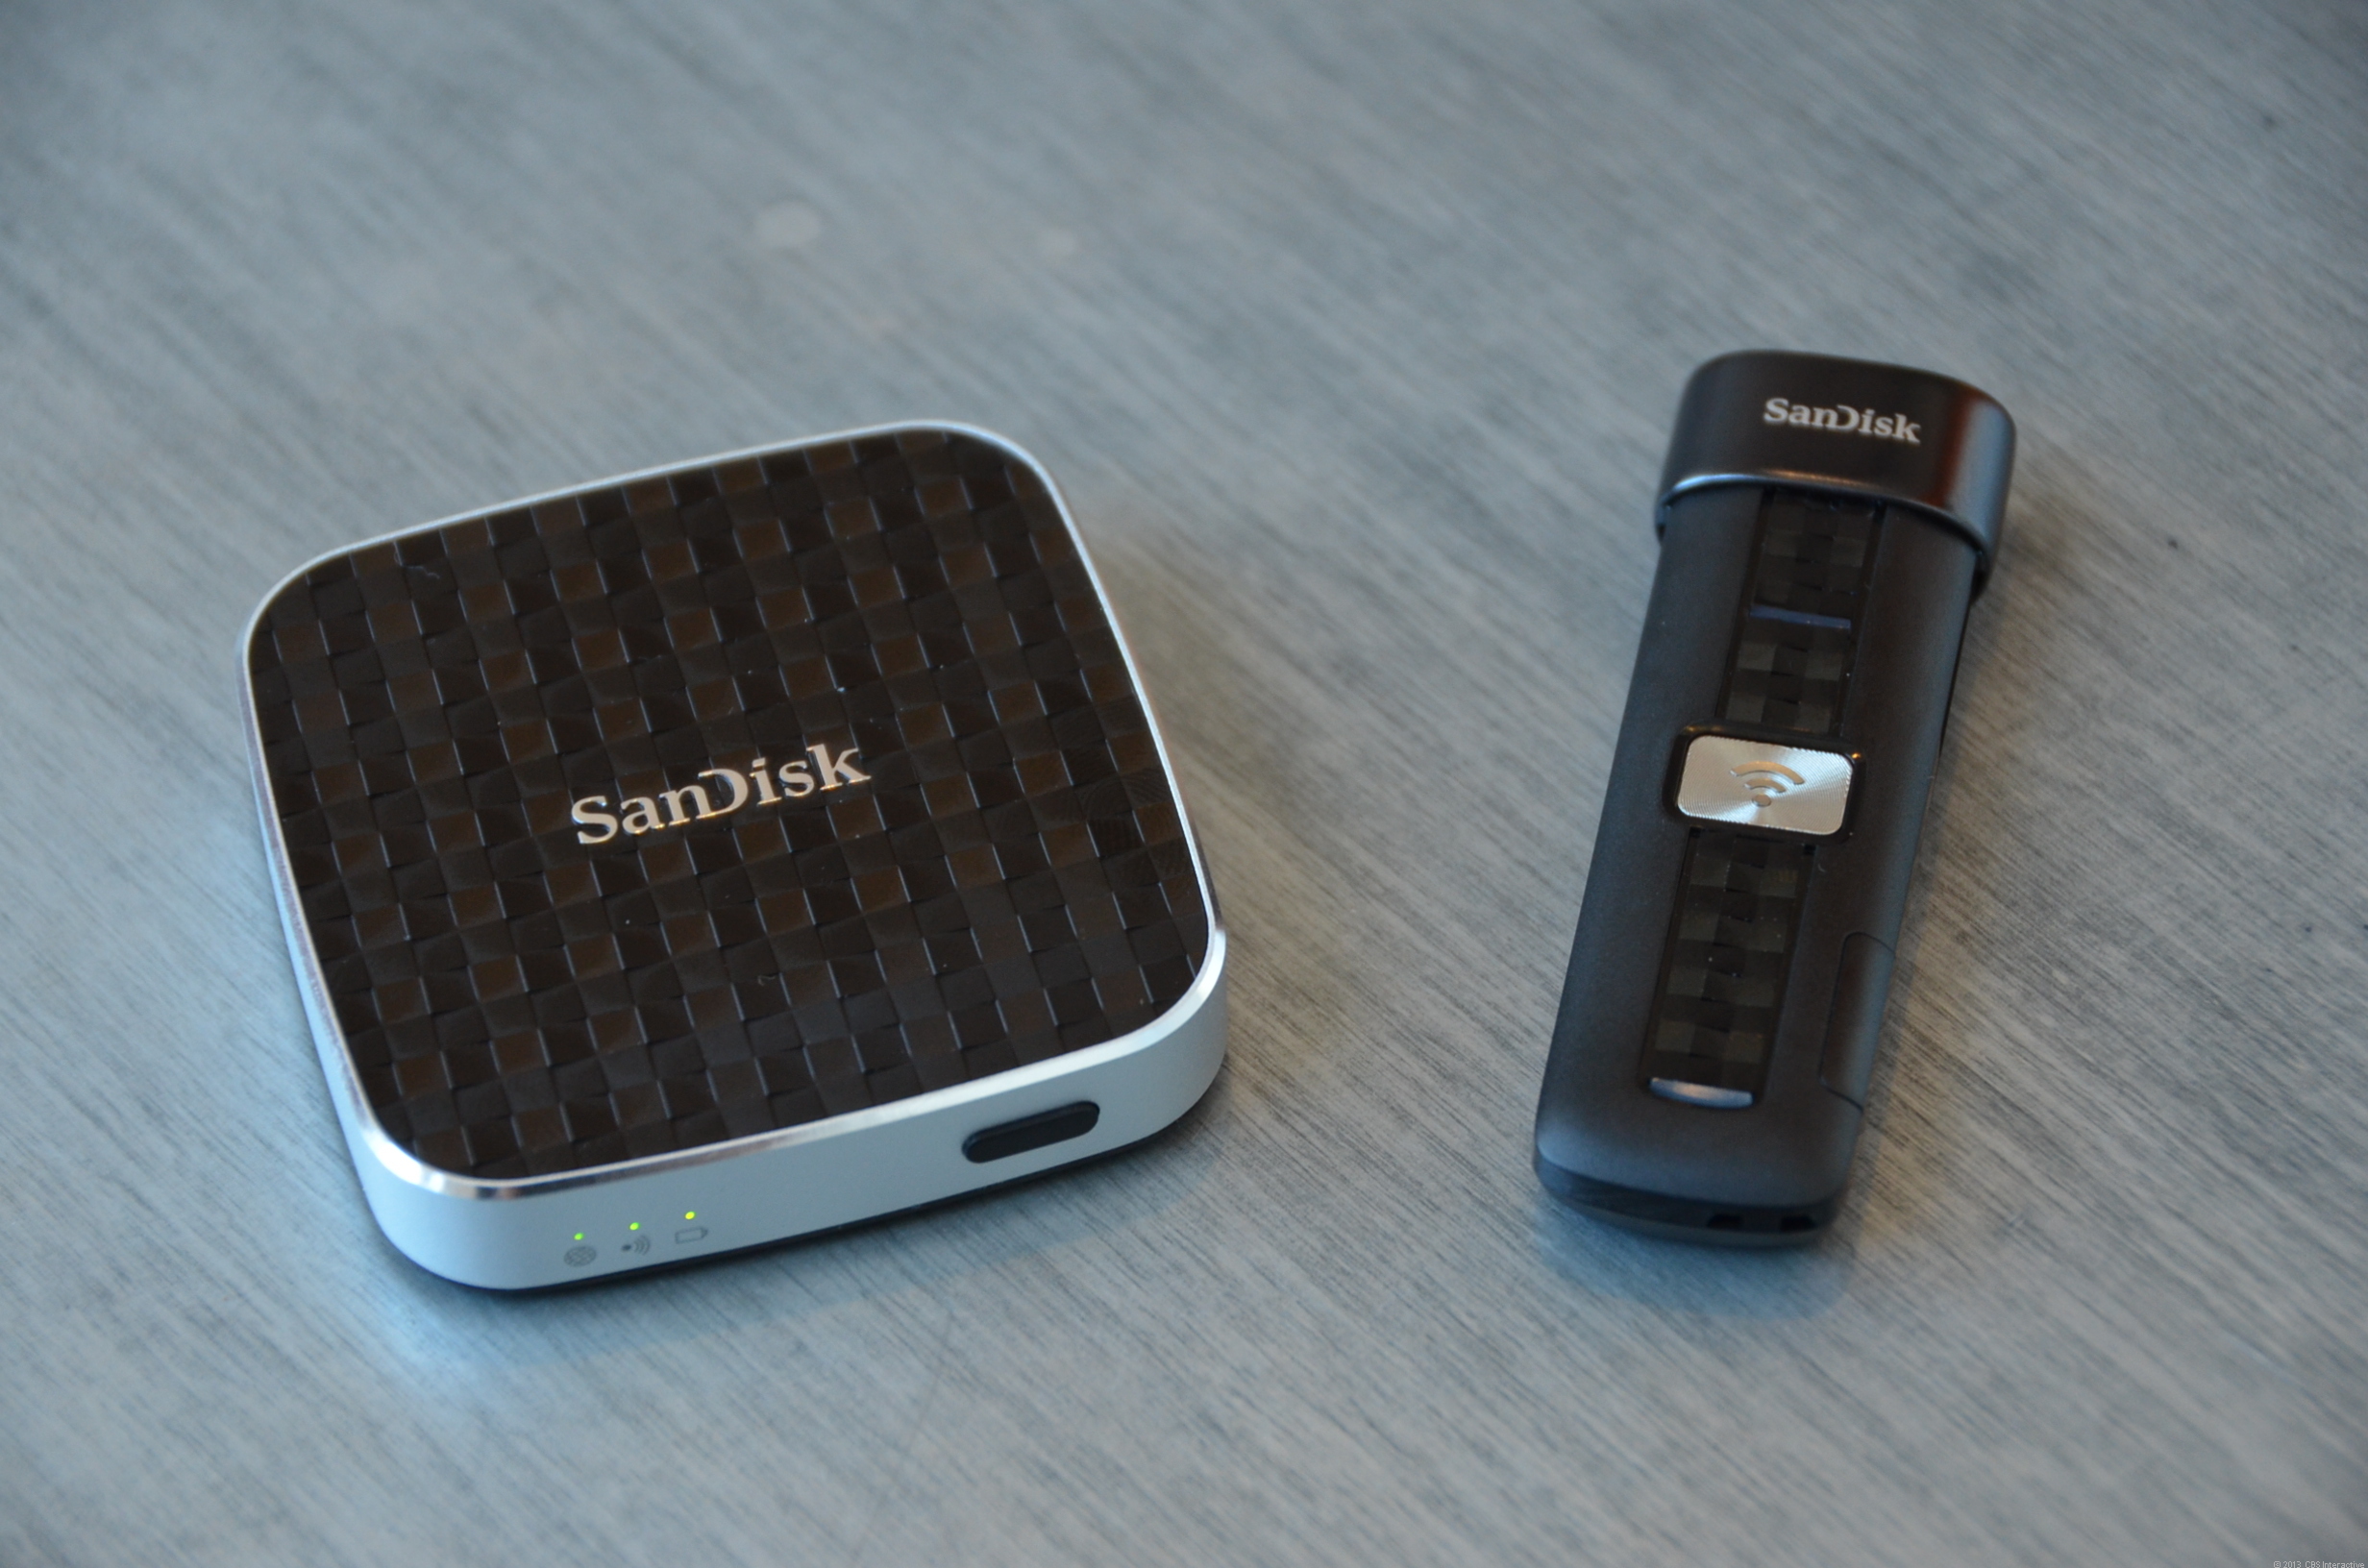 SanDisk Connect Drives Stream Data Wirelessly